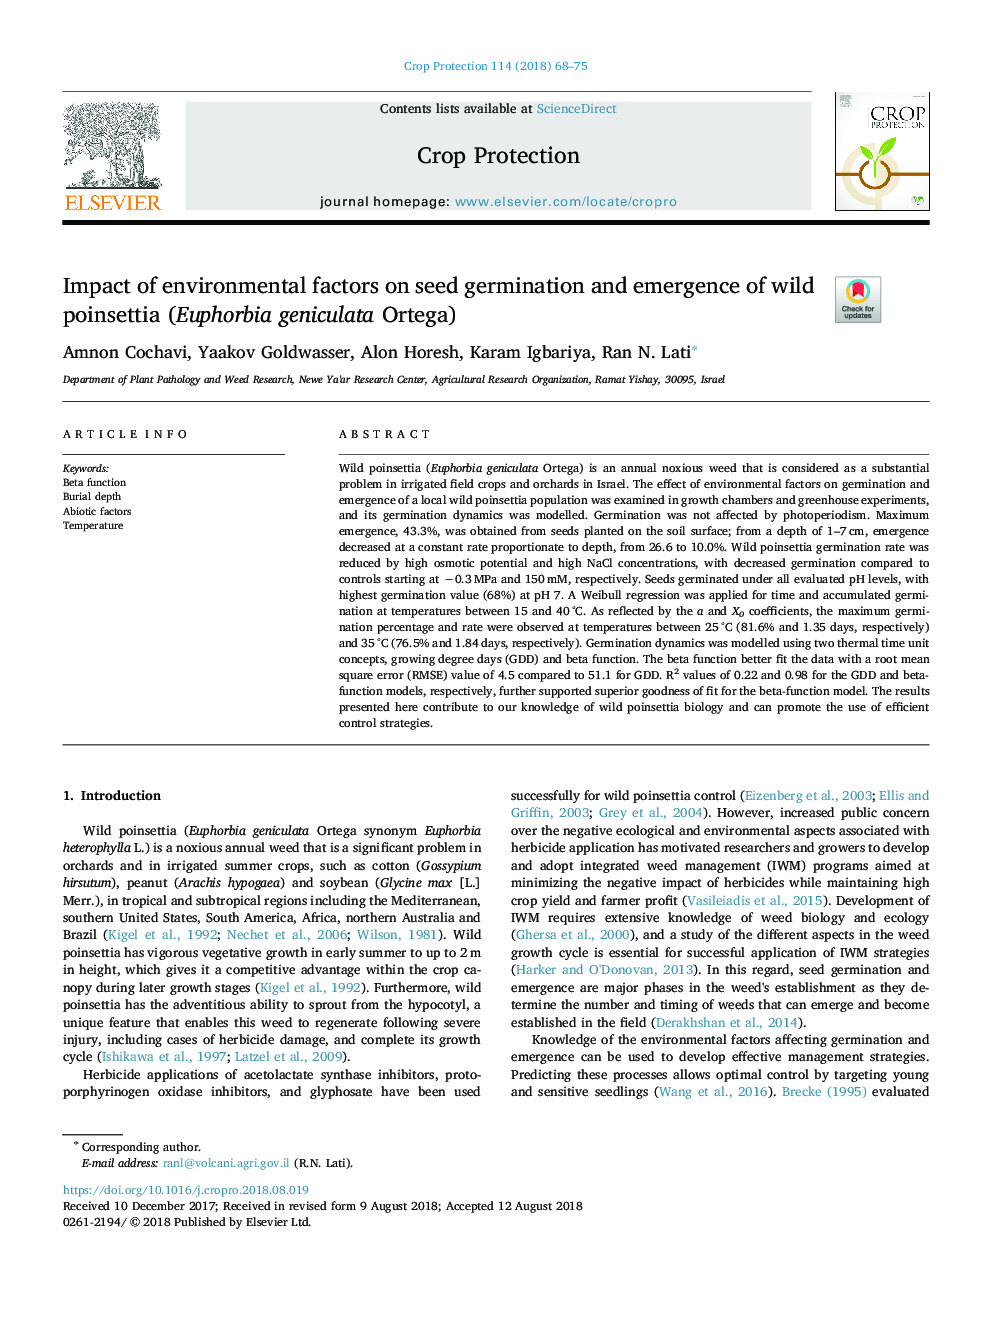 Impact of environmental factors on seed germination and emergence of wild poinsettia (Euphorbia geniculata Ortega)